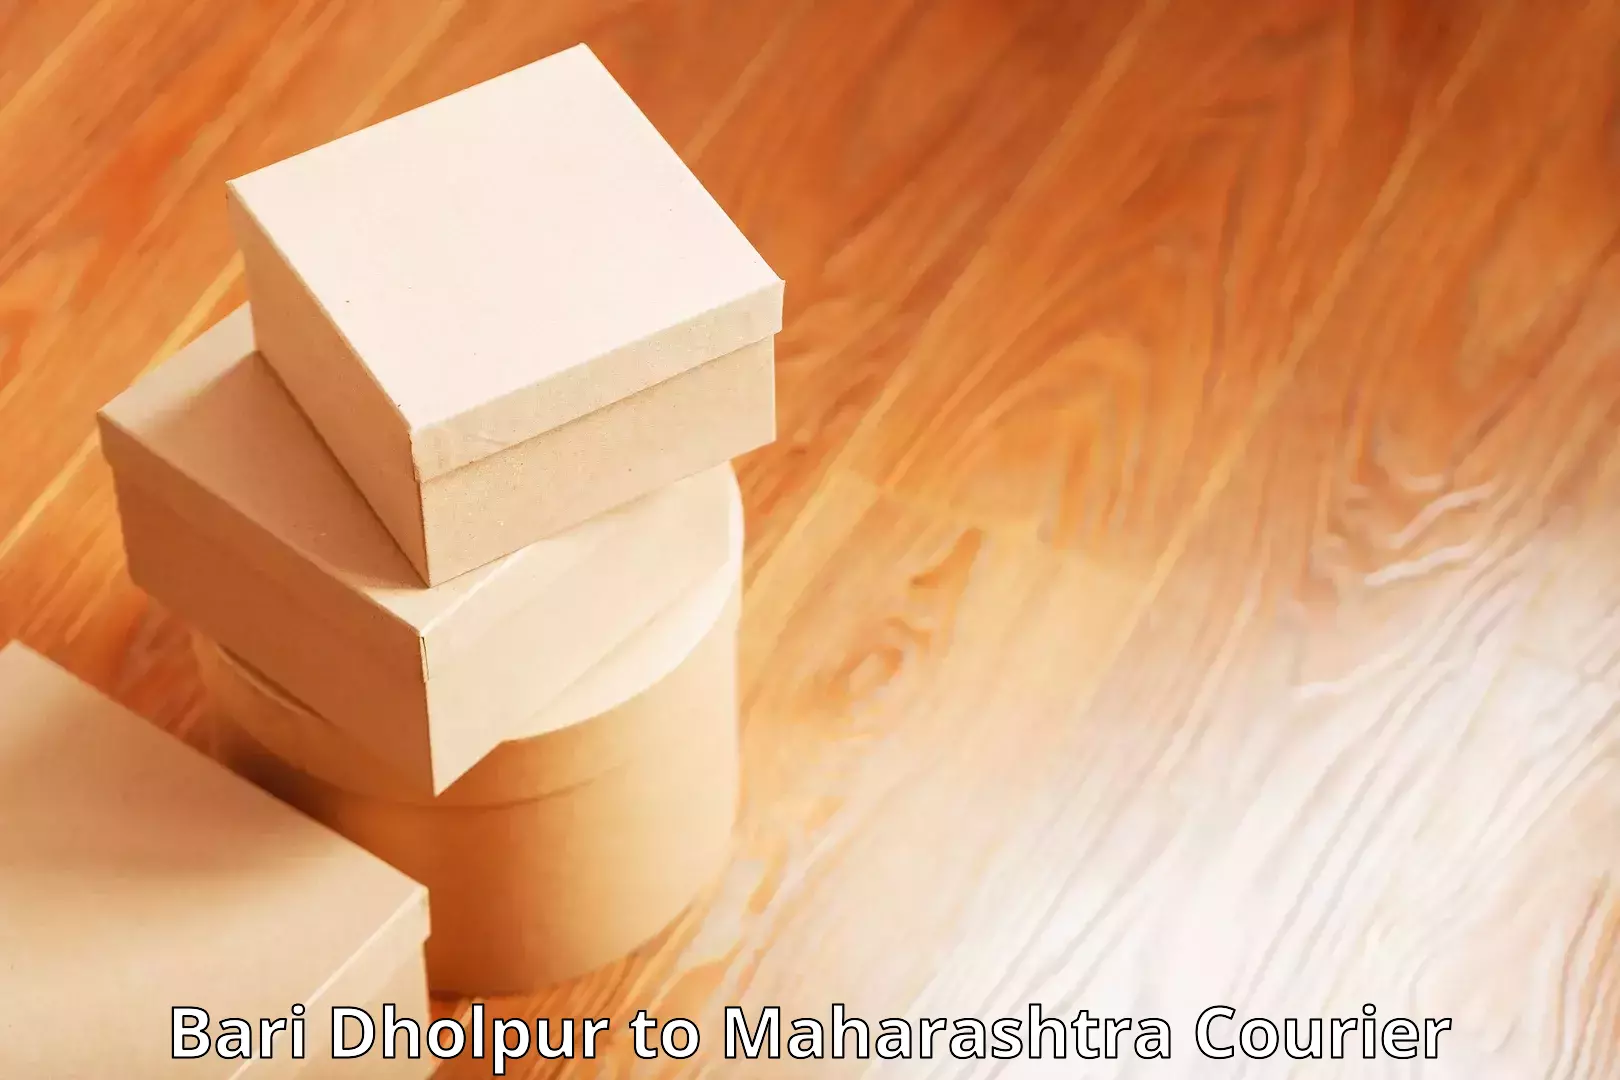 Courier service comparison Bari Dholpur to Maharashtra